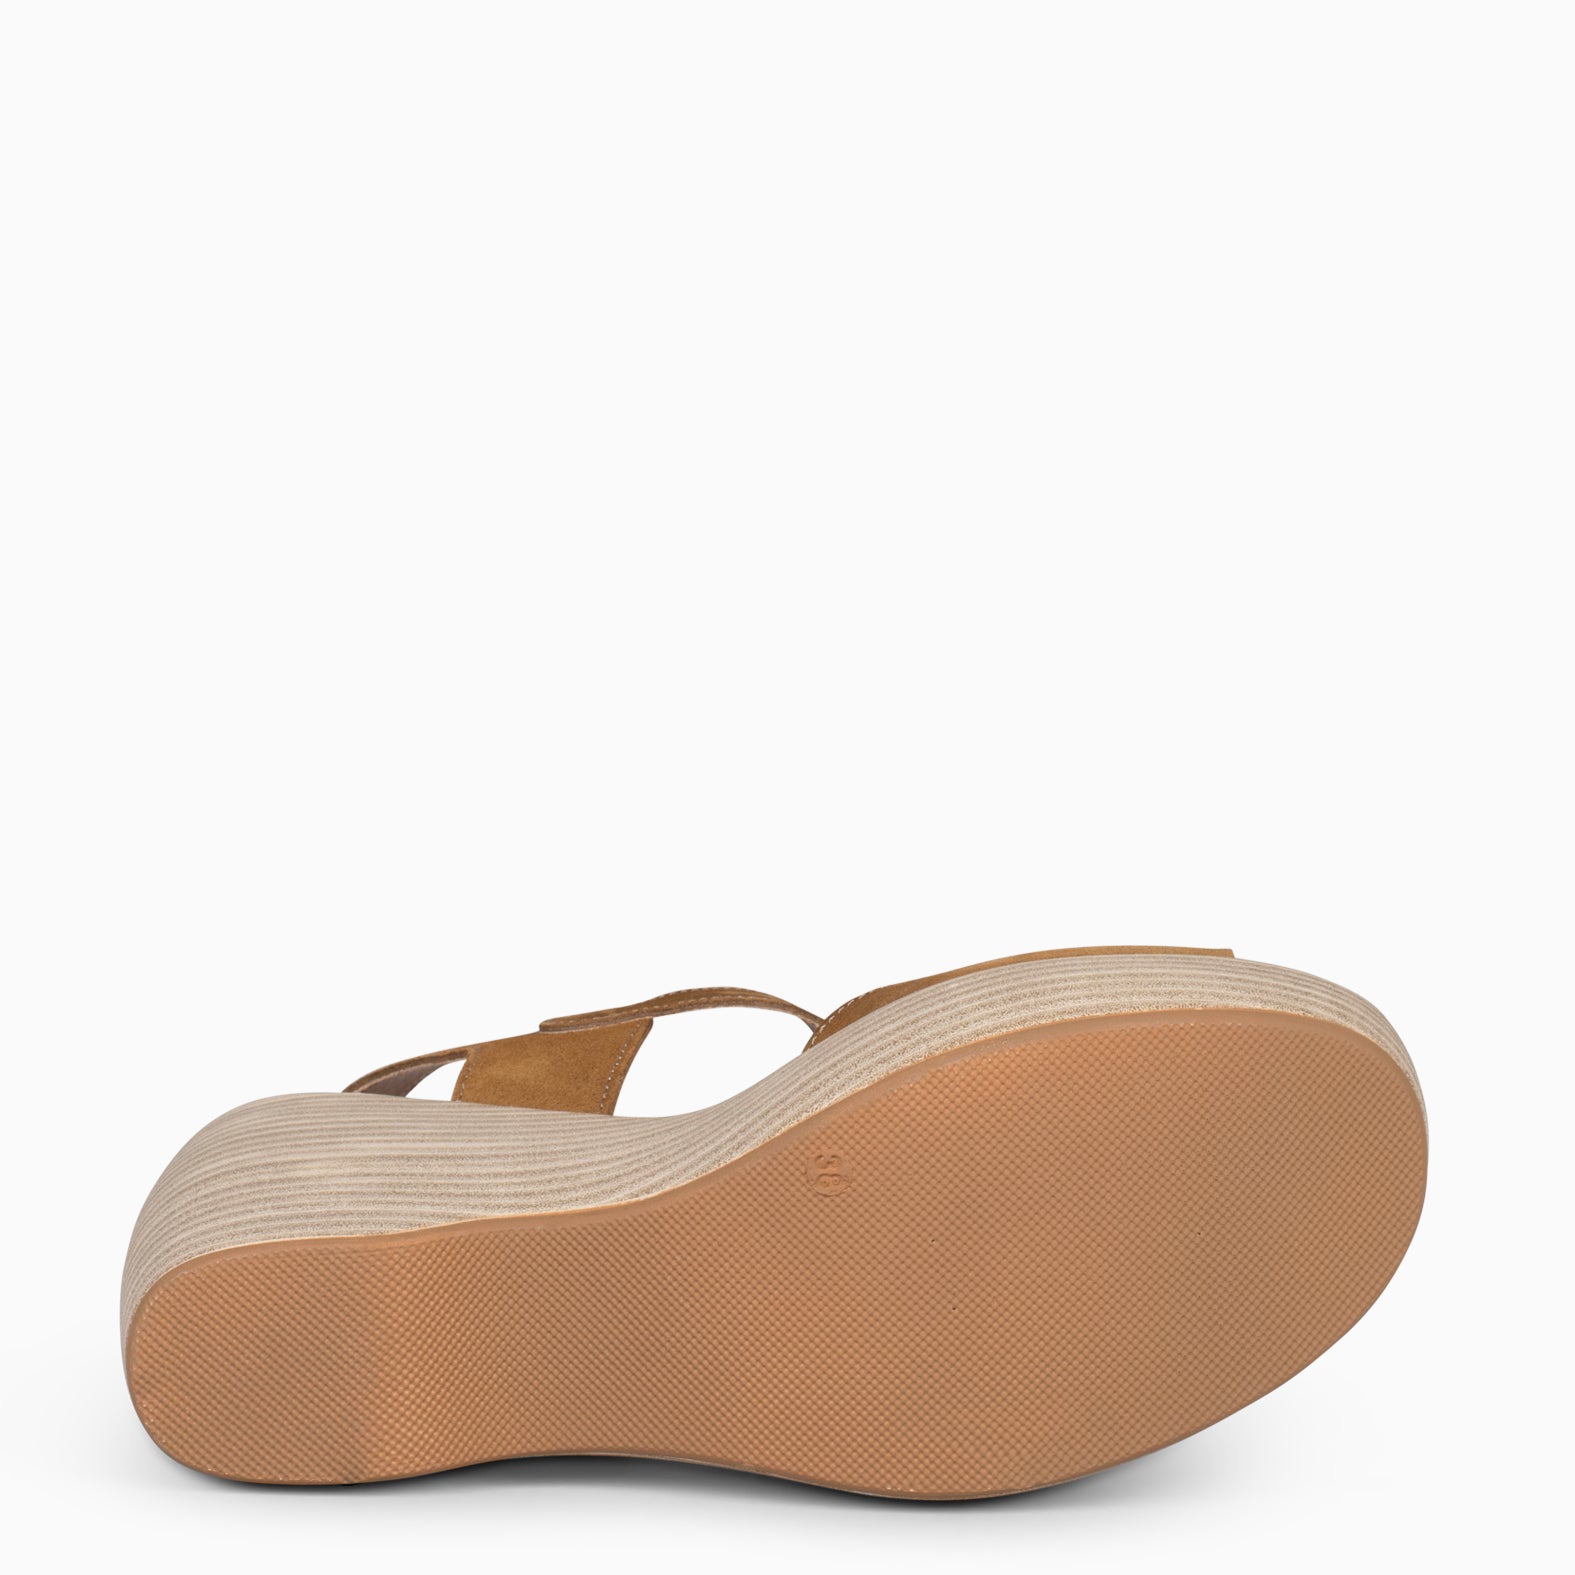 SIDNEY – BROWN wedge sandals